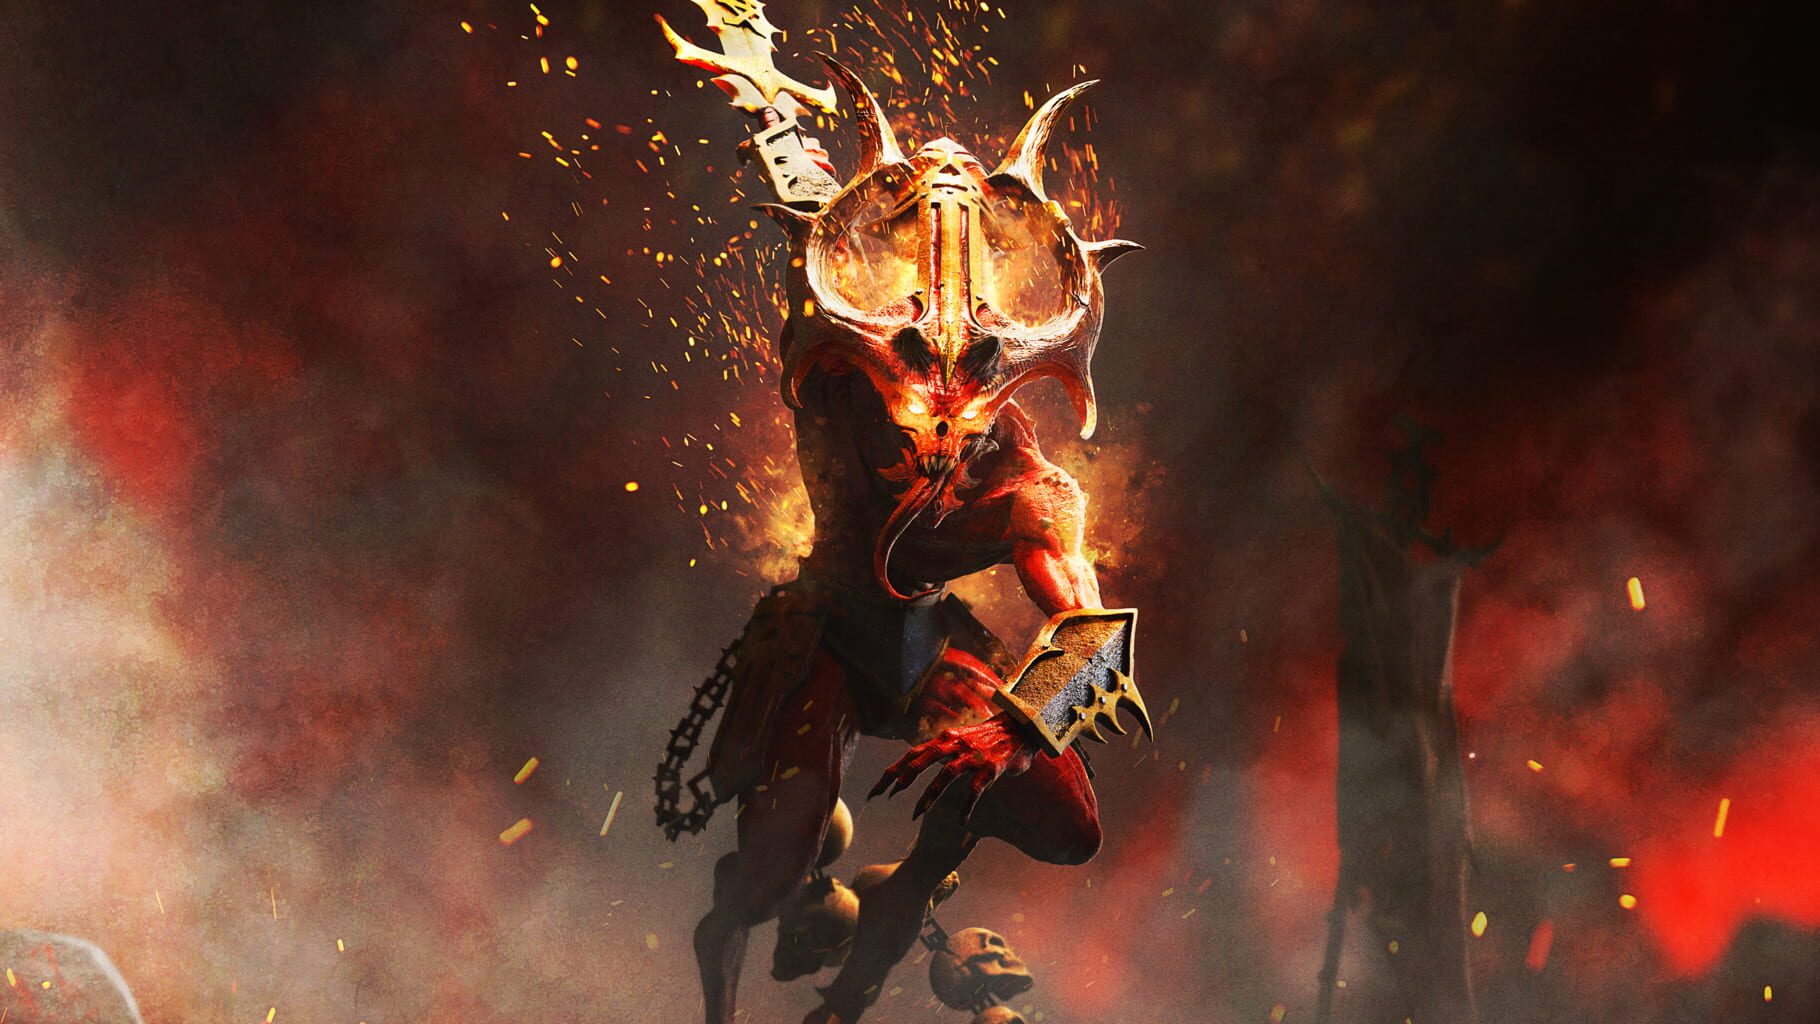 Warhammer: Chaosbane Image